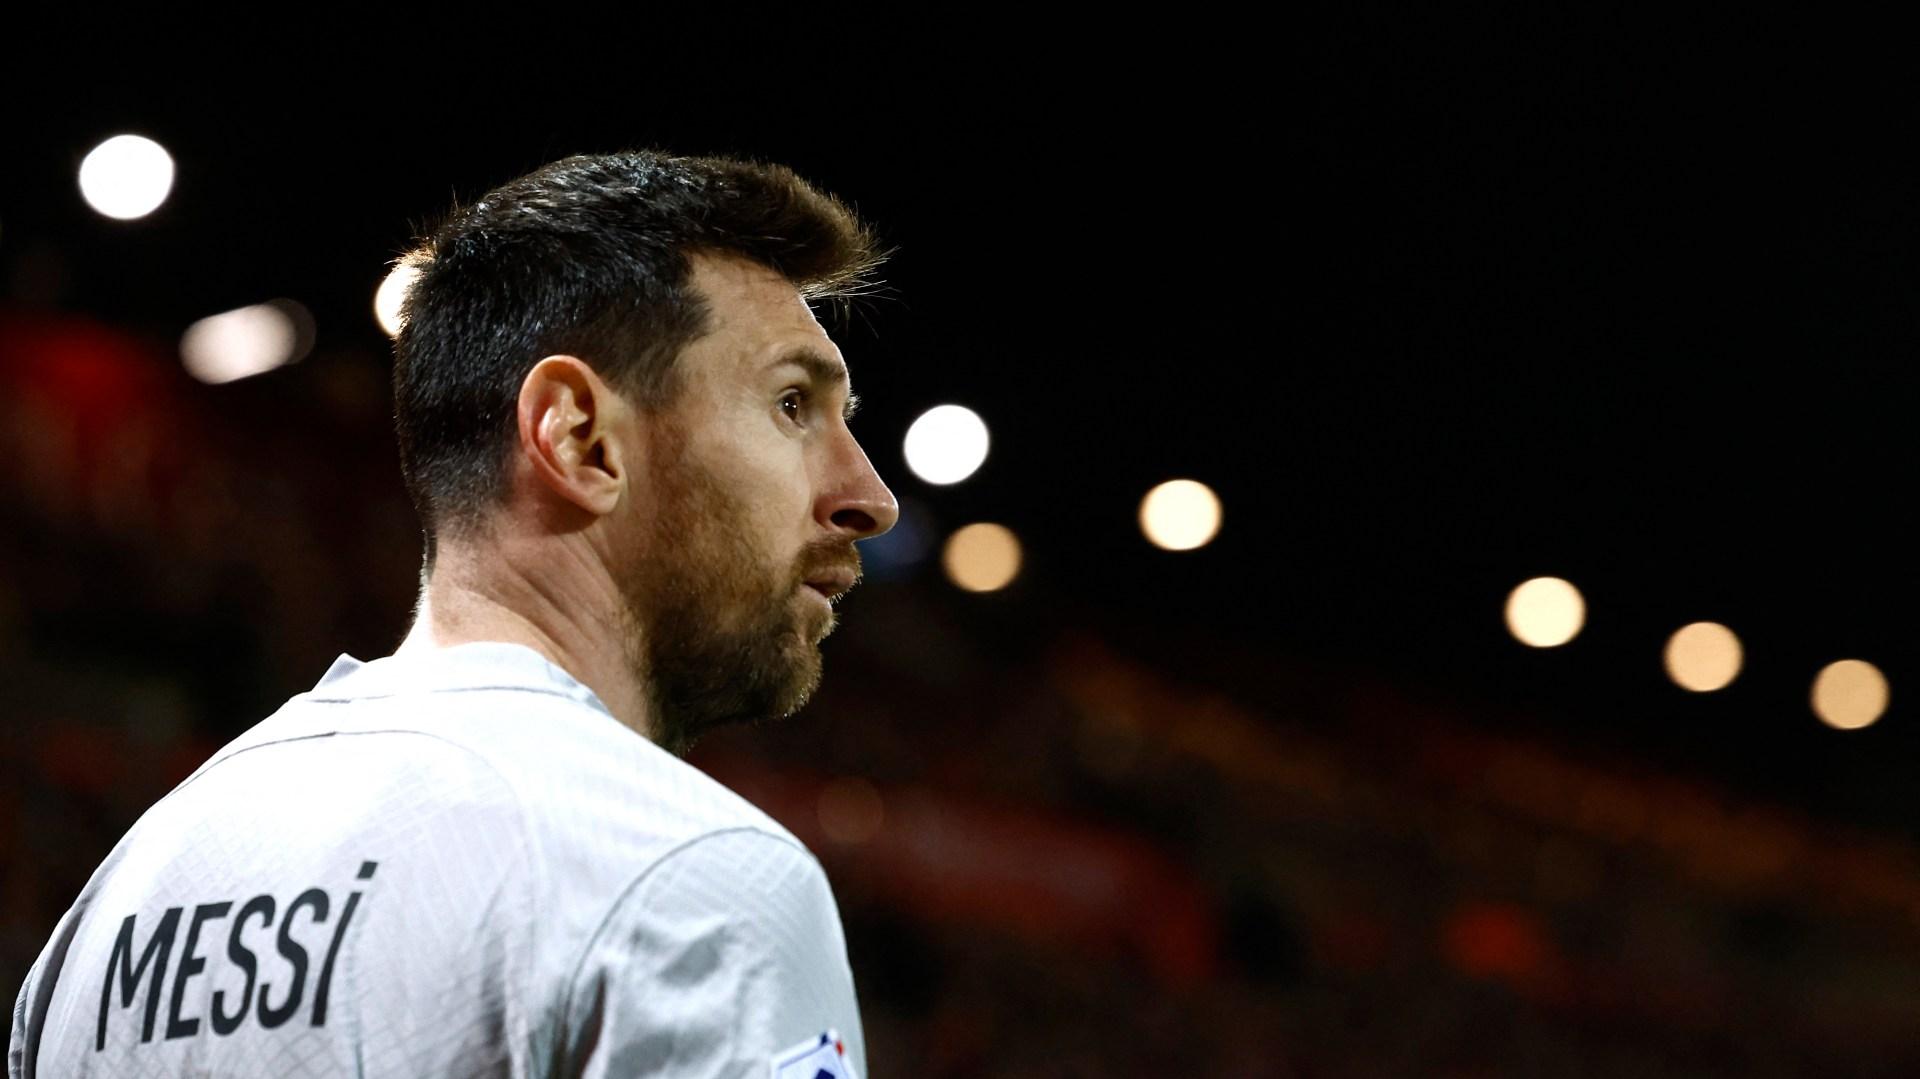 Messi to face disciplinary action at PSG over Saudi Arabia trip